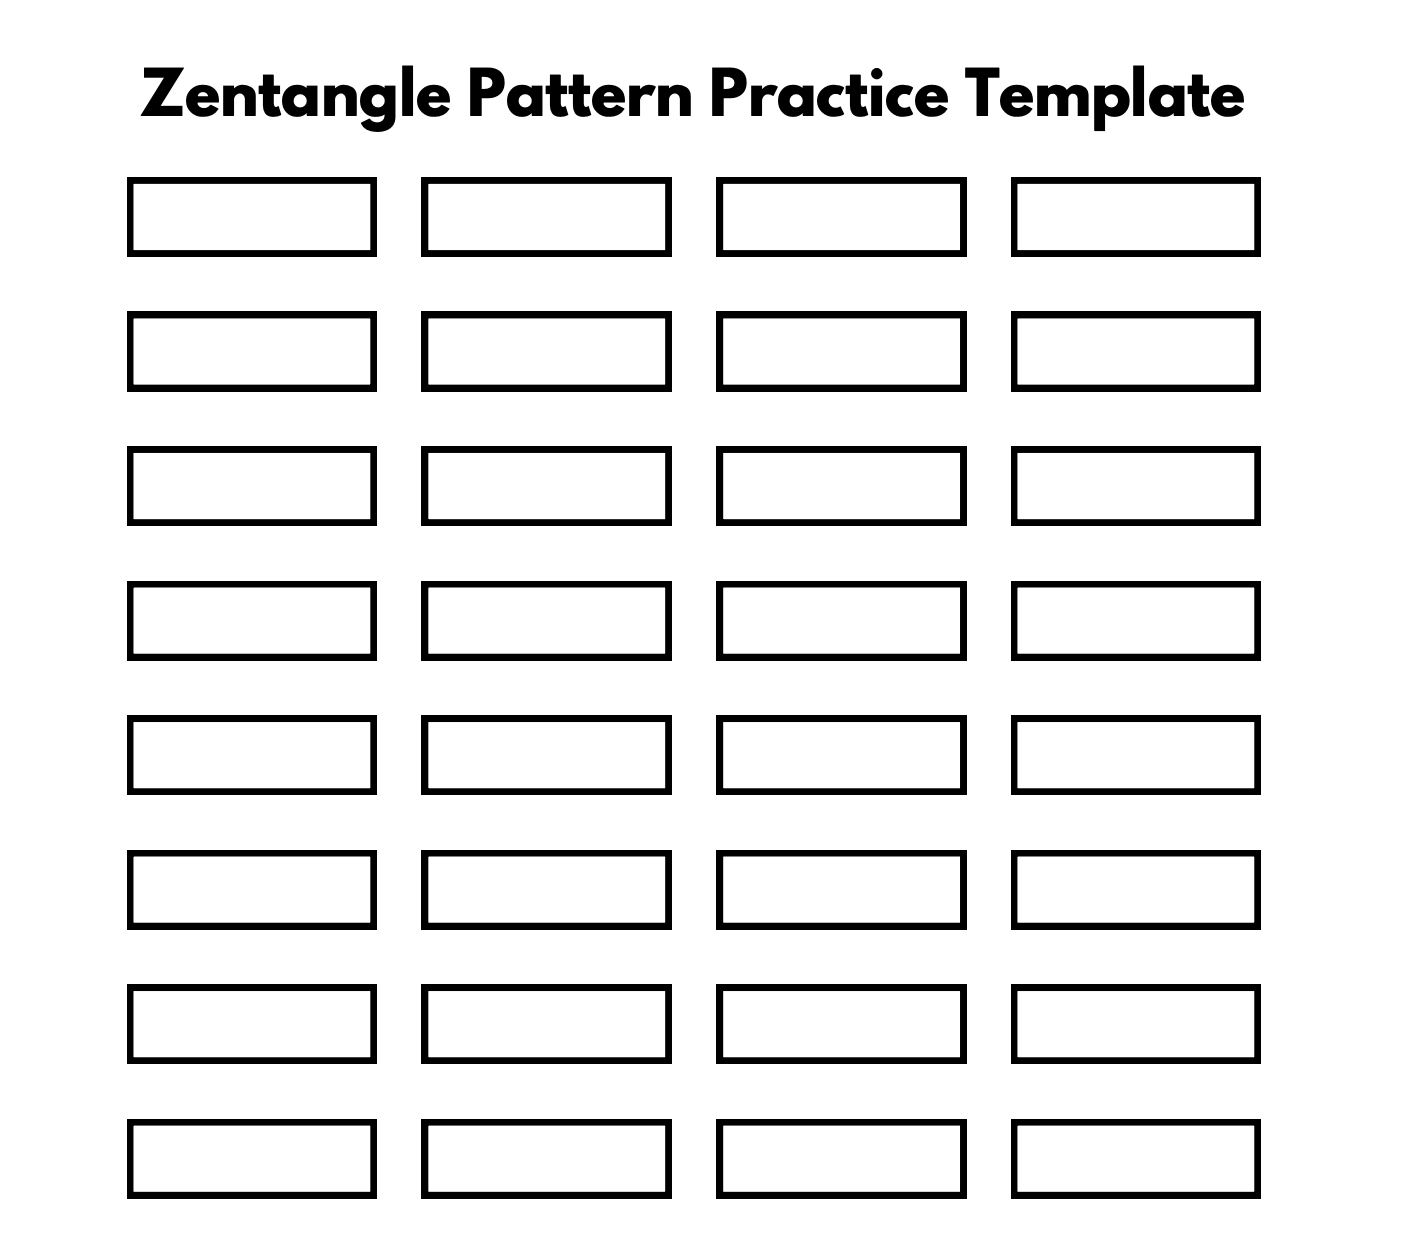 Zentangle Practice Template Thumbnail.png